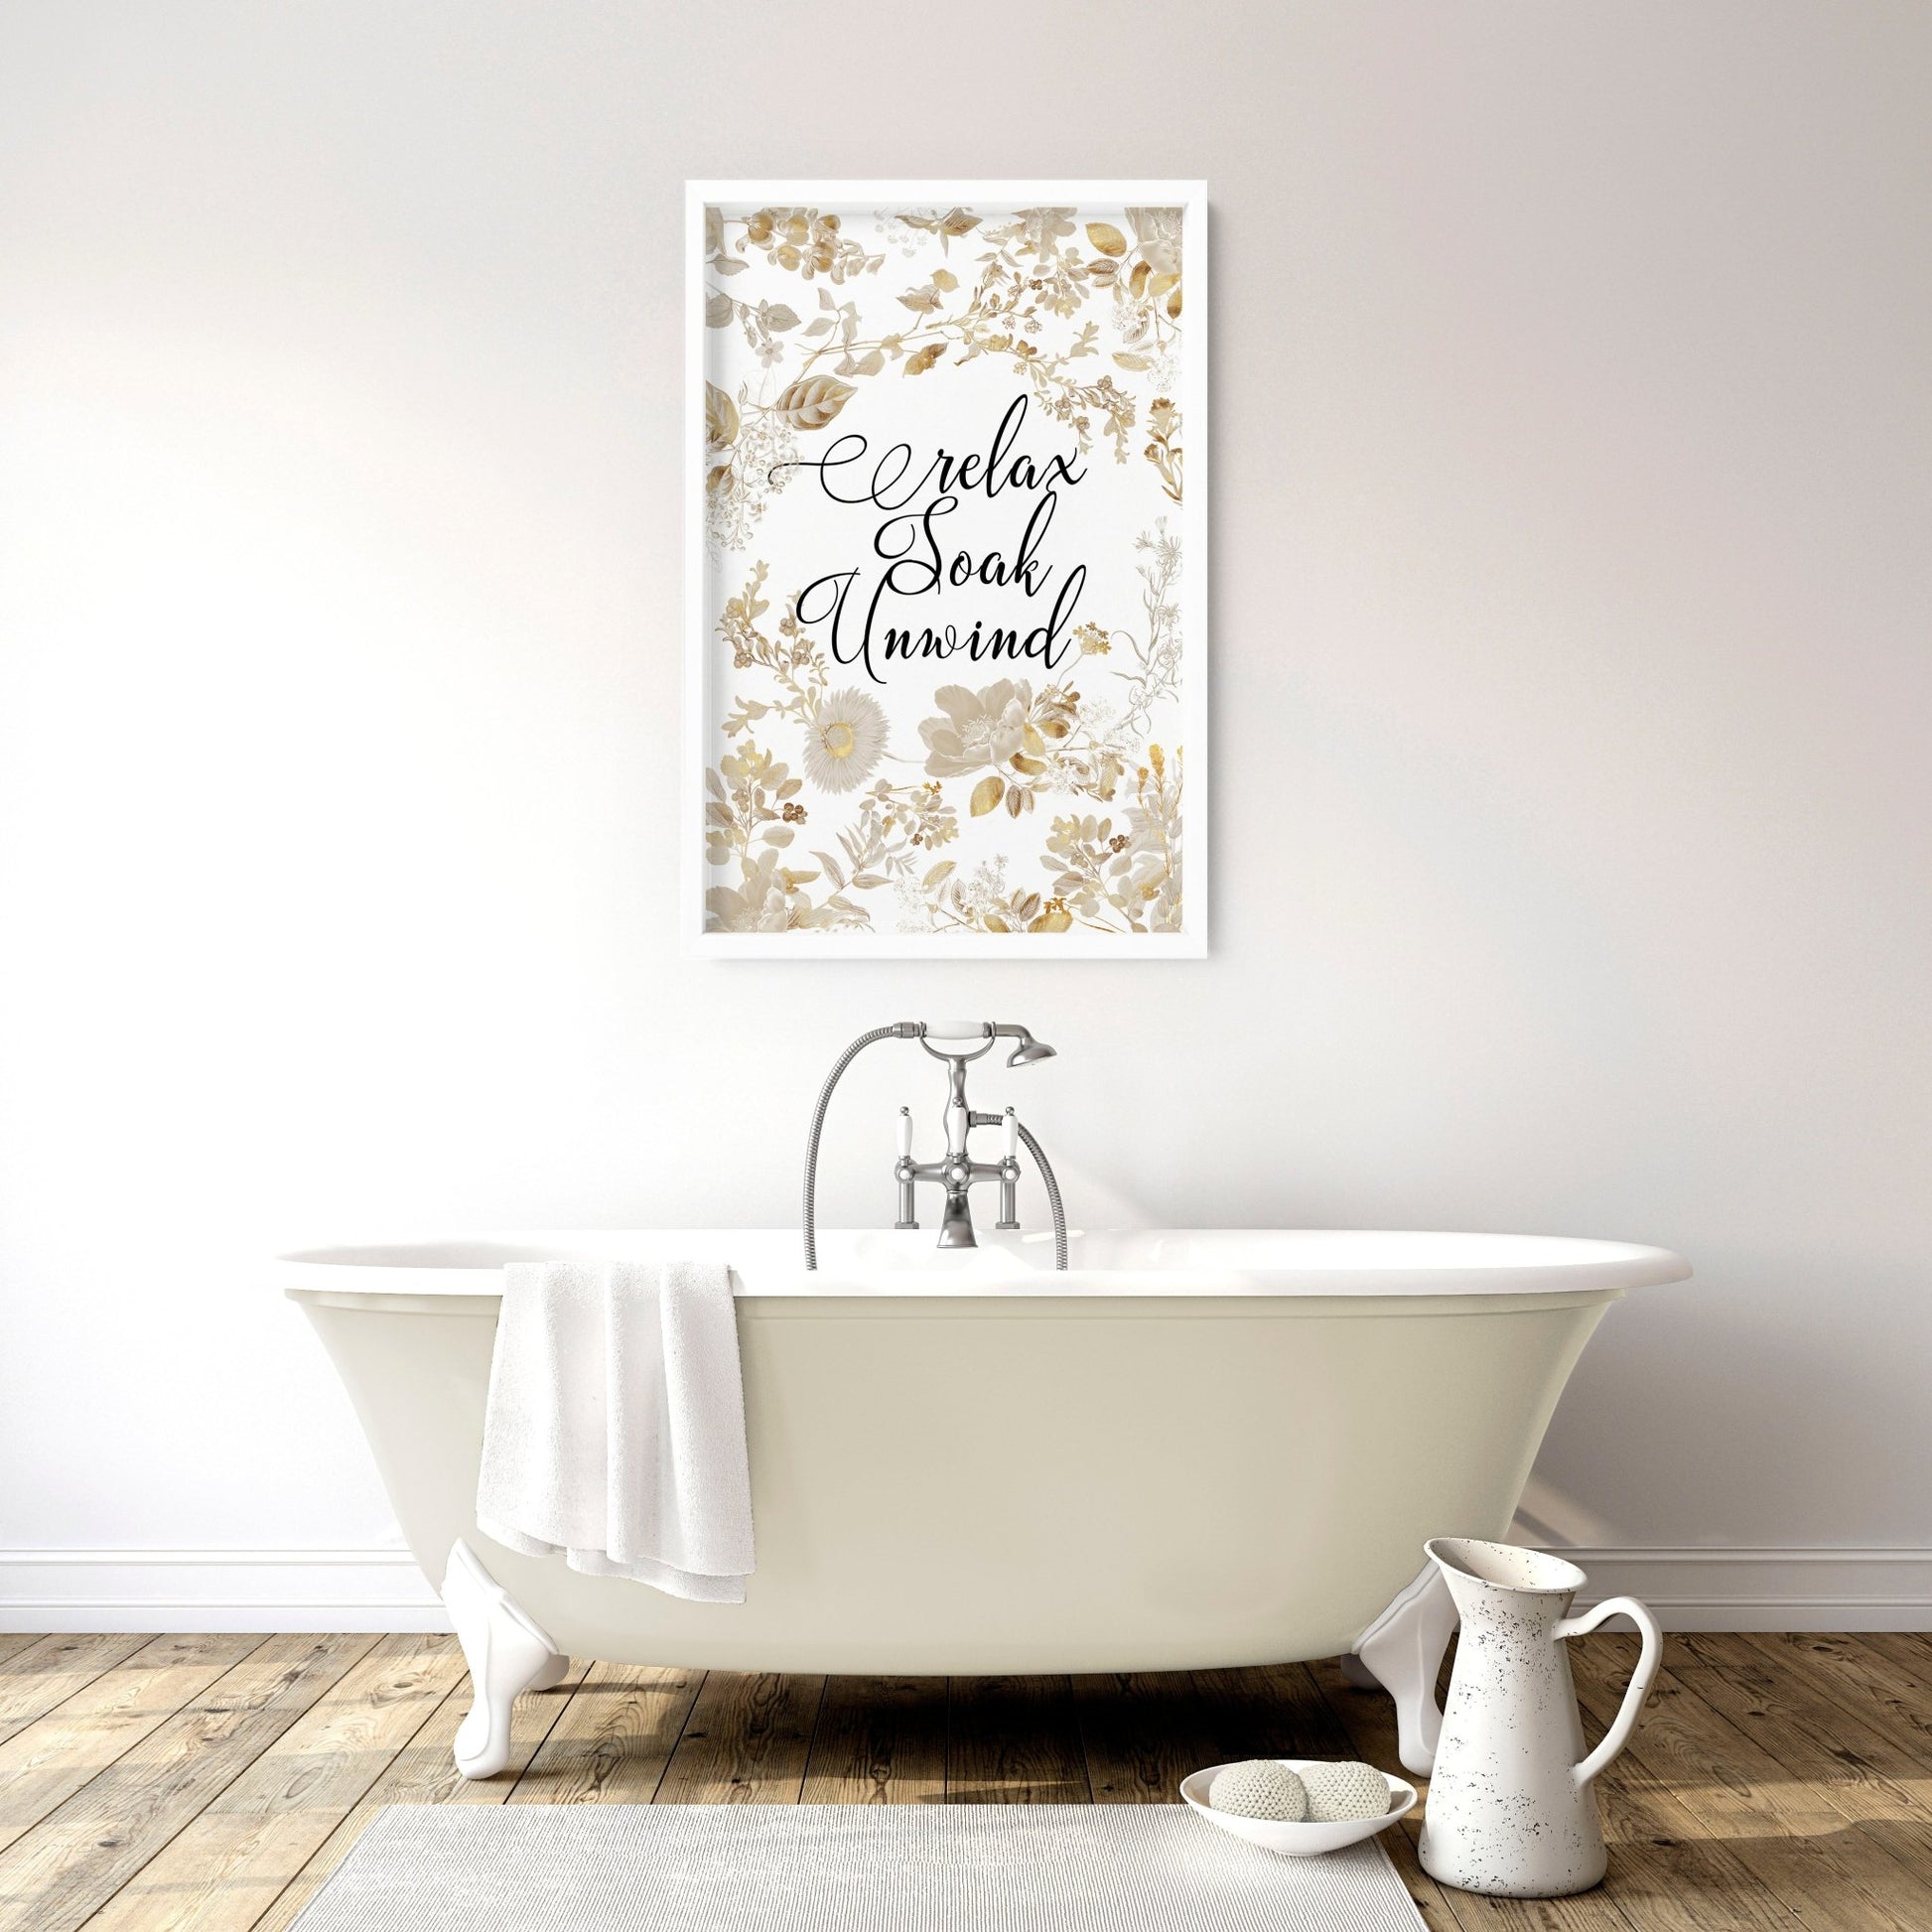 Art for bathroom walls | wall art print